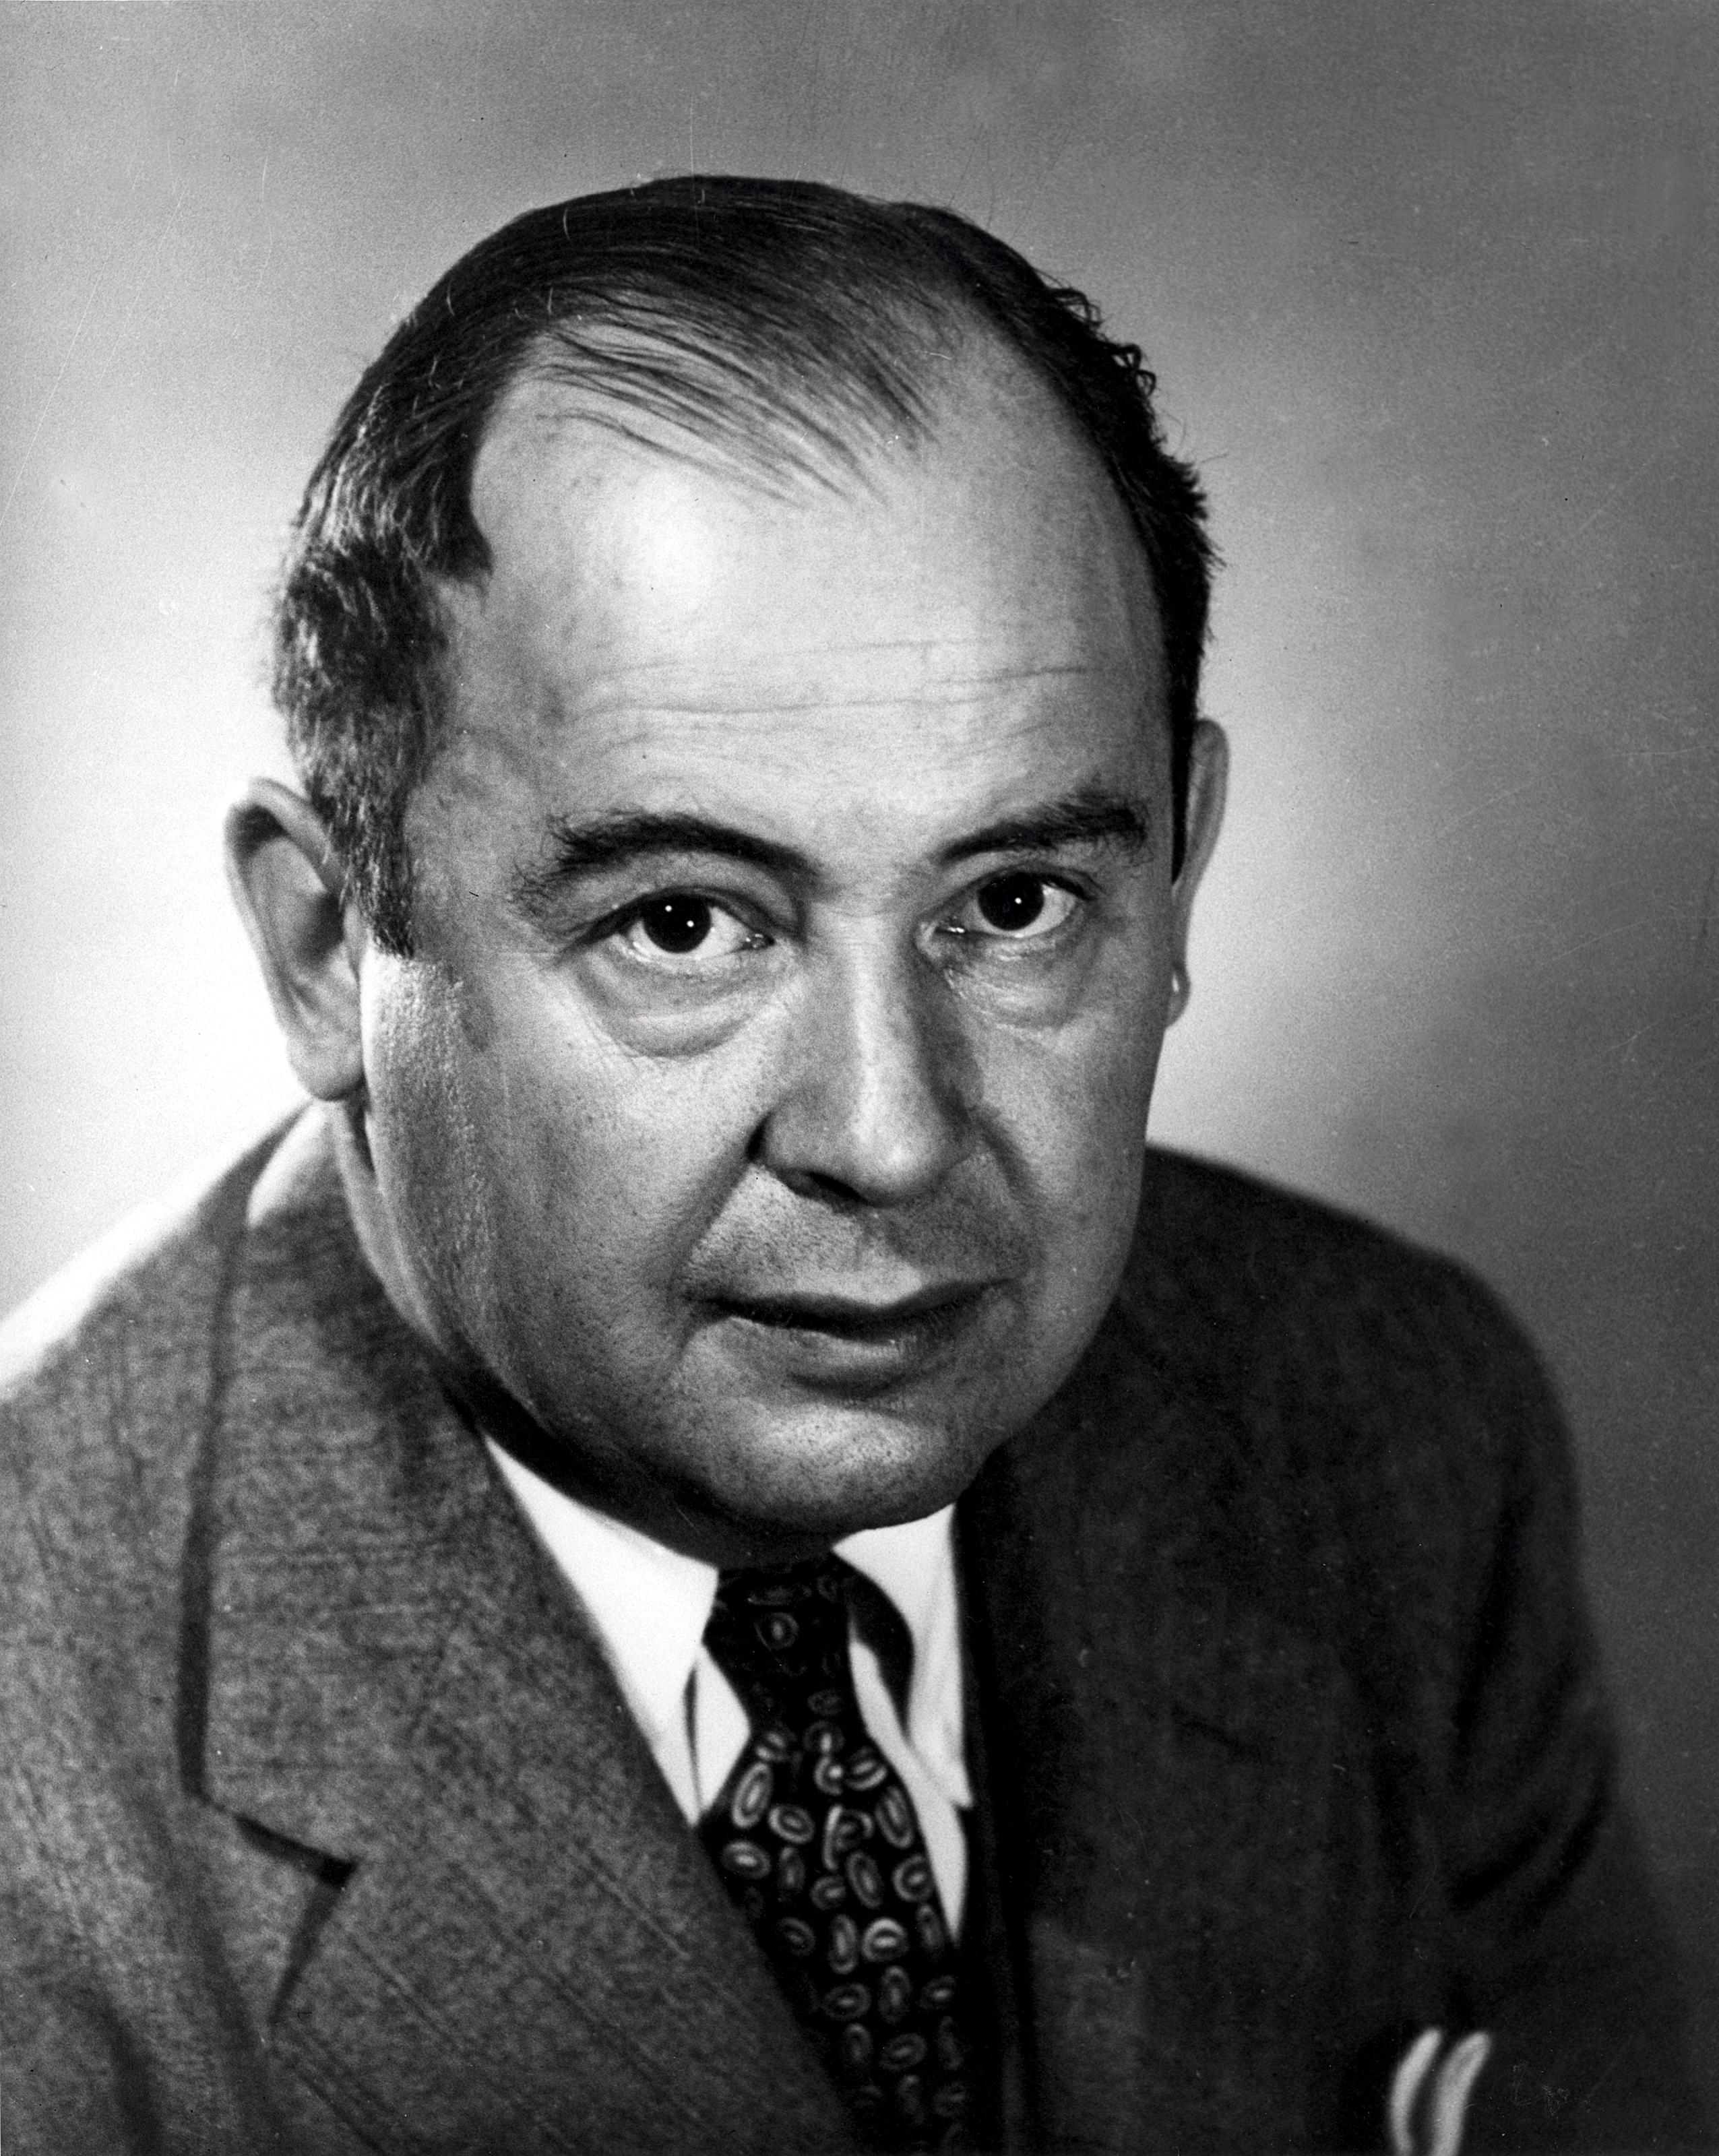 An ode to von Neumann, one of the greatest mathematicians